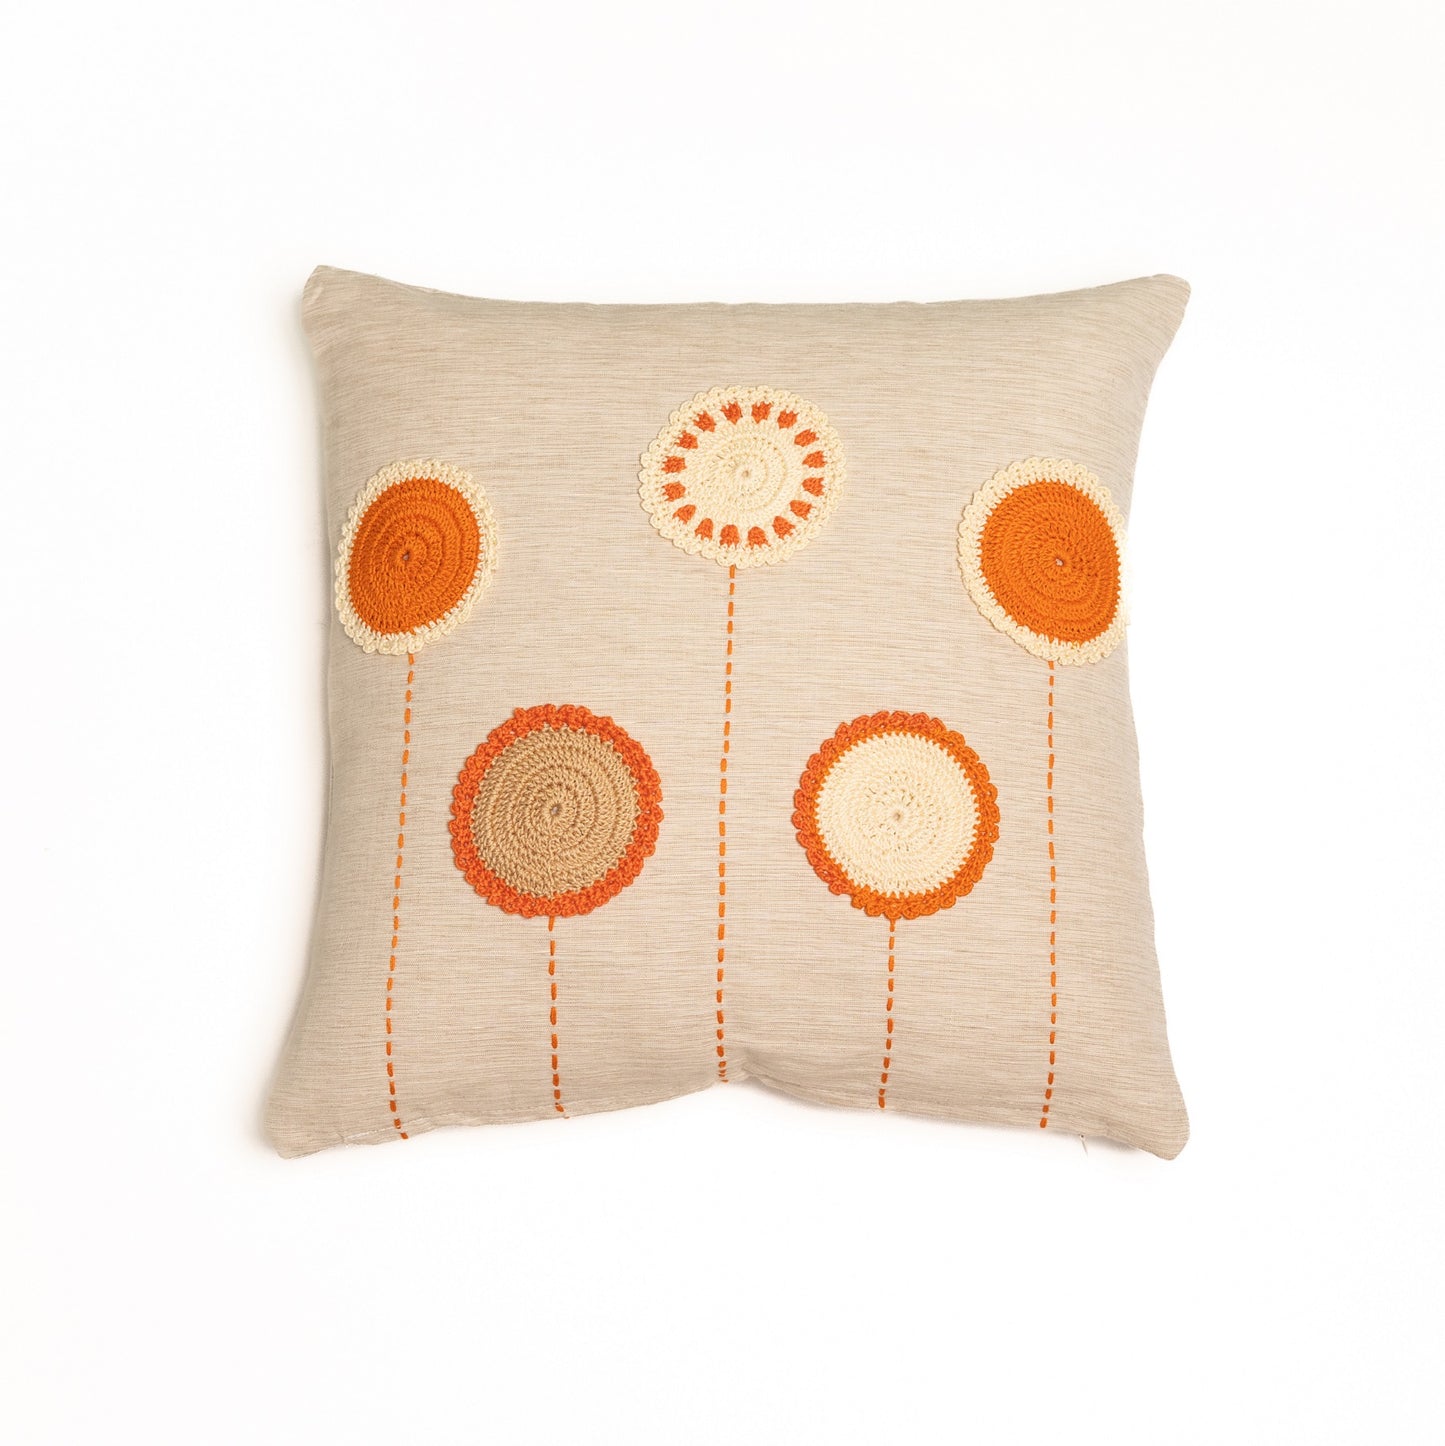 Crochet circles cushion cover (Orange) - Beige